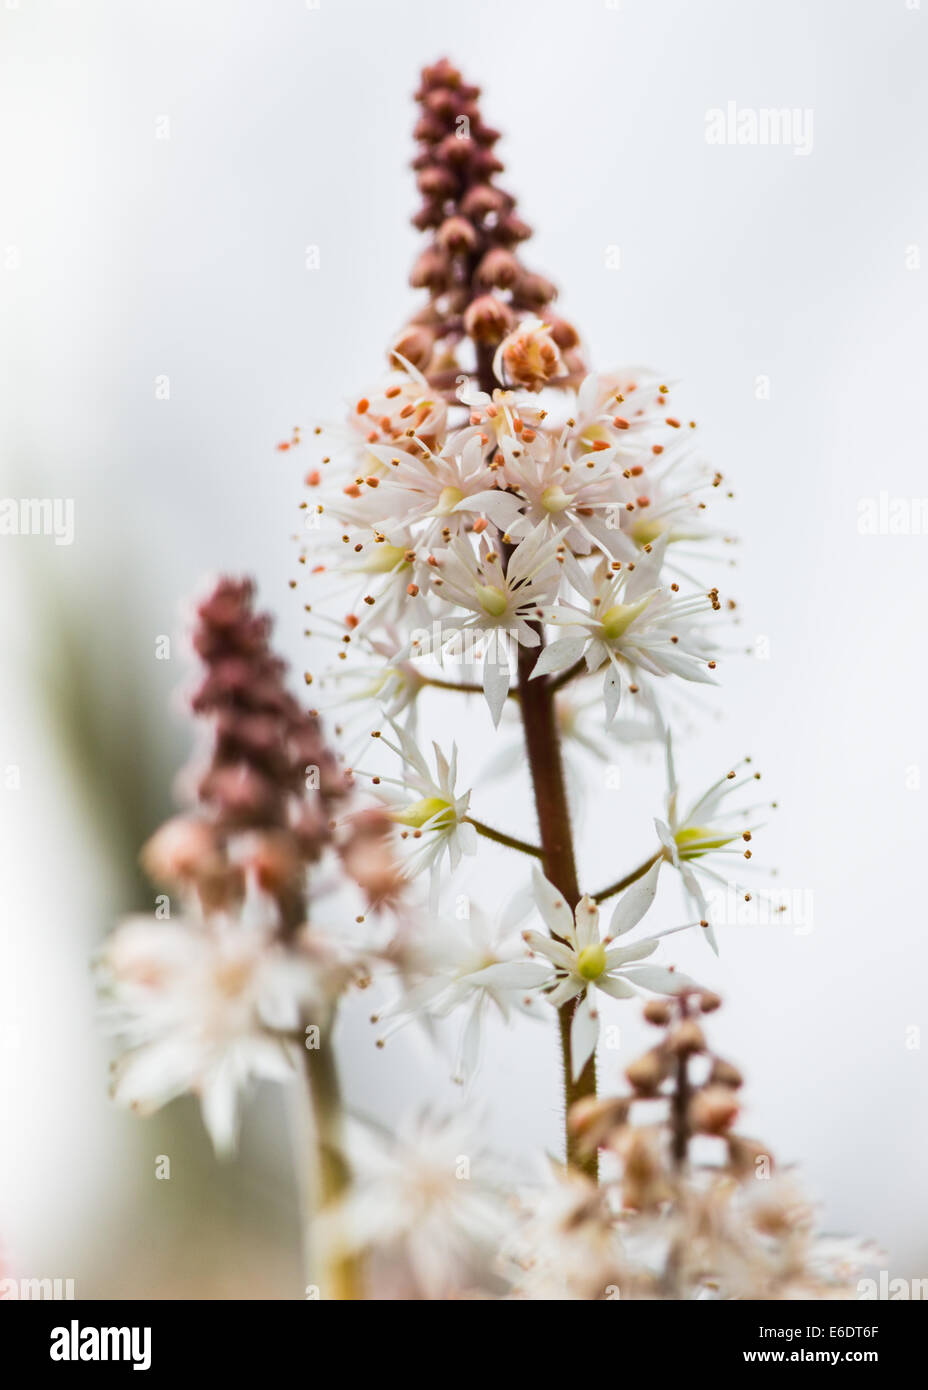 Lachenalia flower spike white and pink soft background macro Stock Photo